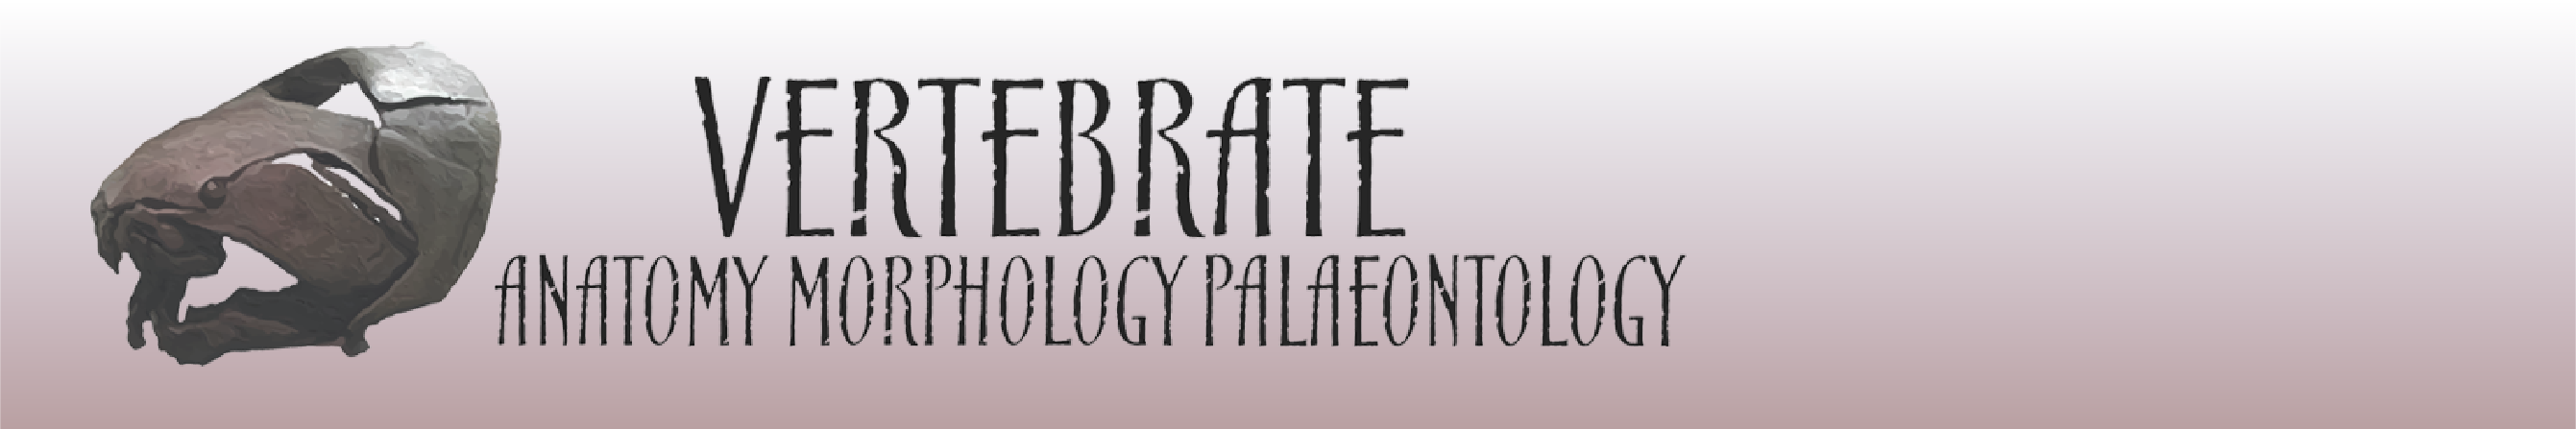 Vertebrate Anatomy Morphology Palaeontology